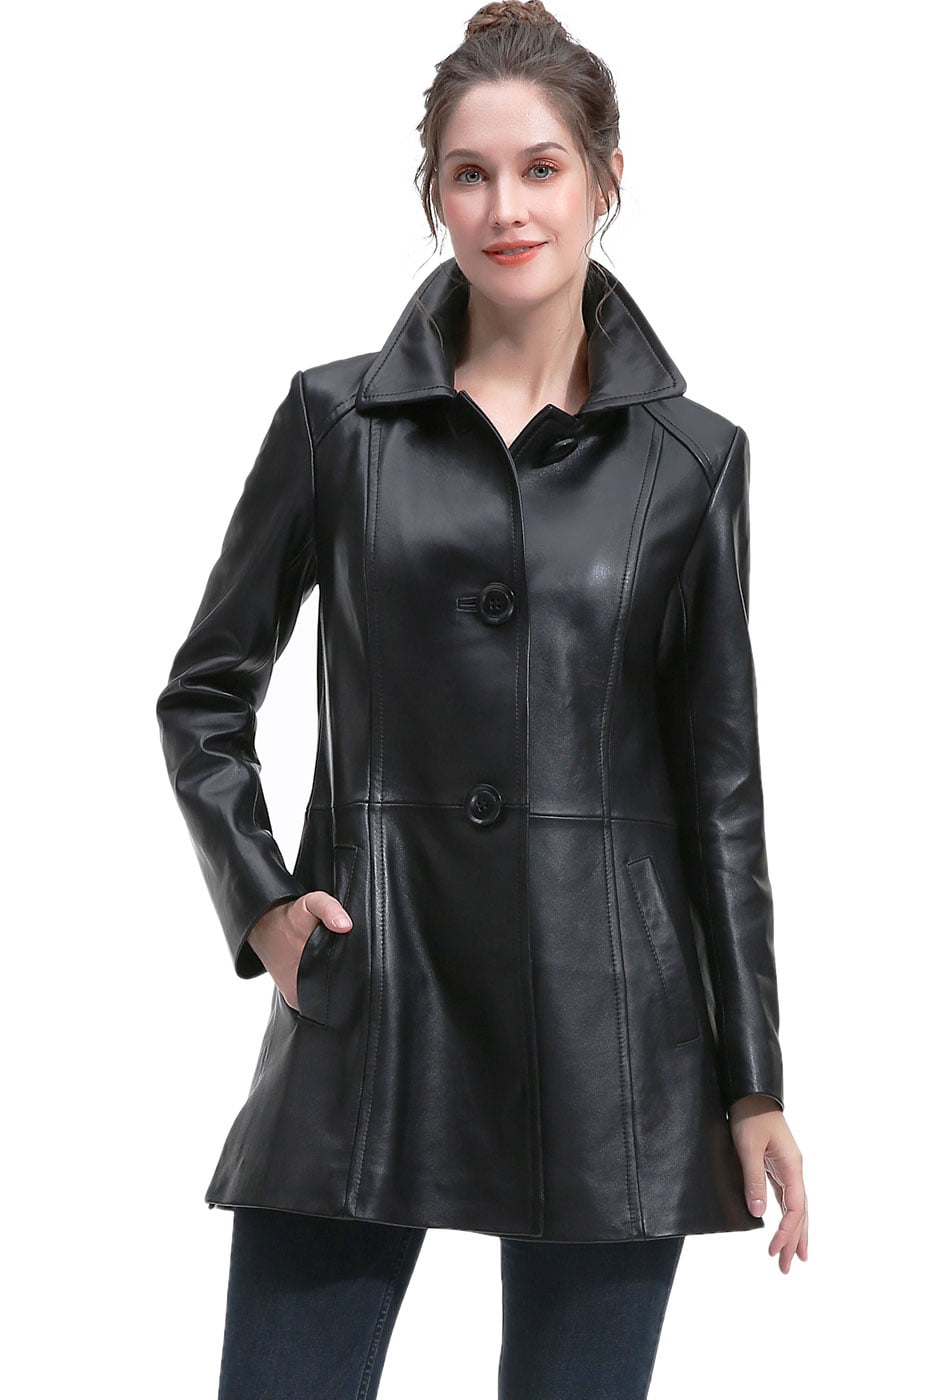 Regular & Plus Size & Petite BGSD Womens Kare Lambskin Leather Jacket 